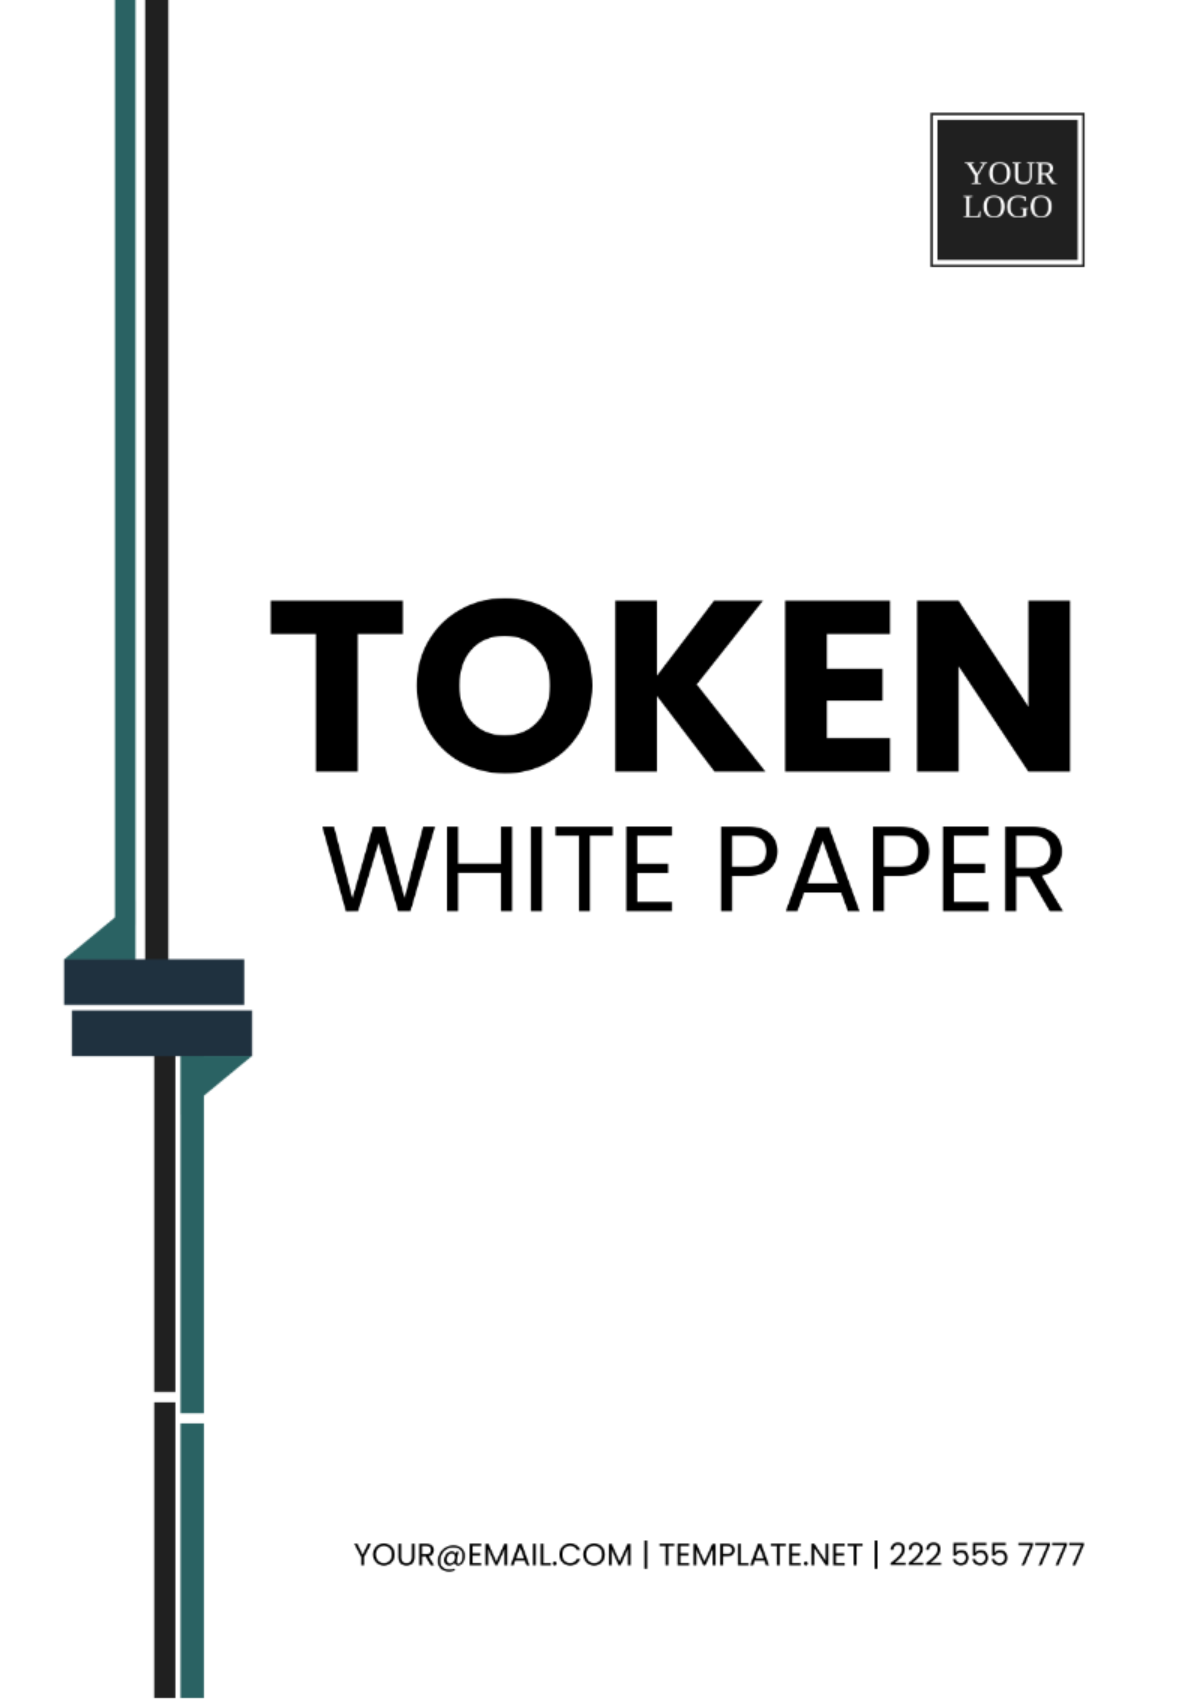 Token White Paper Template